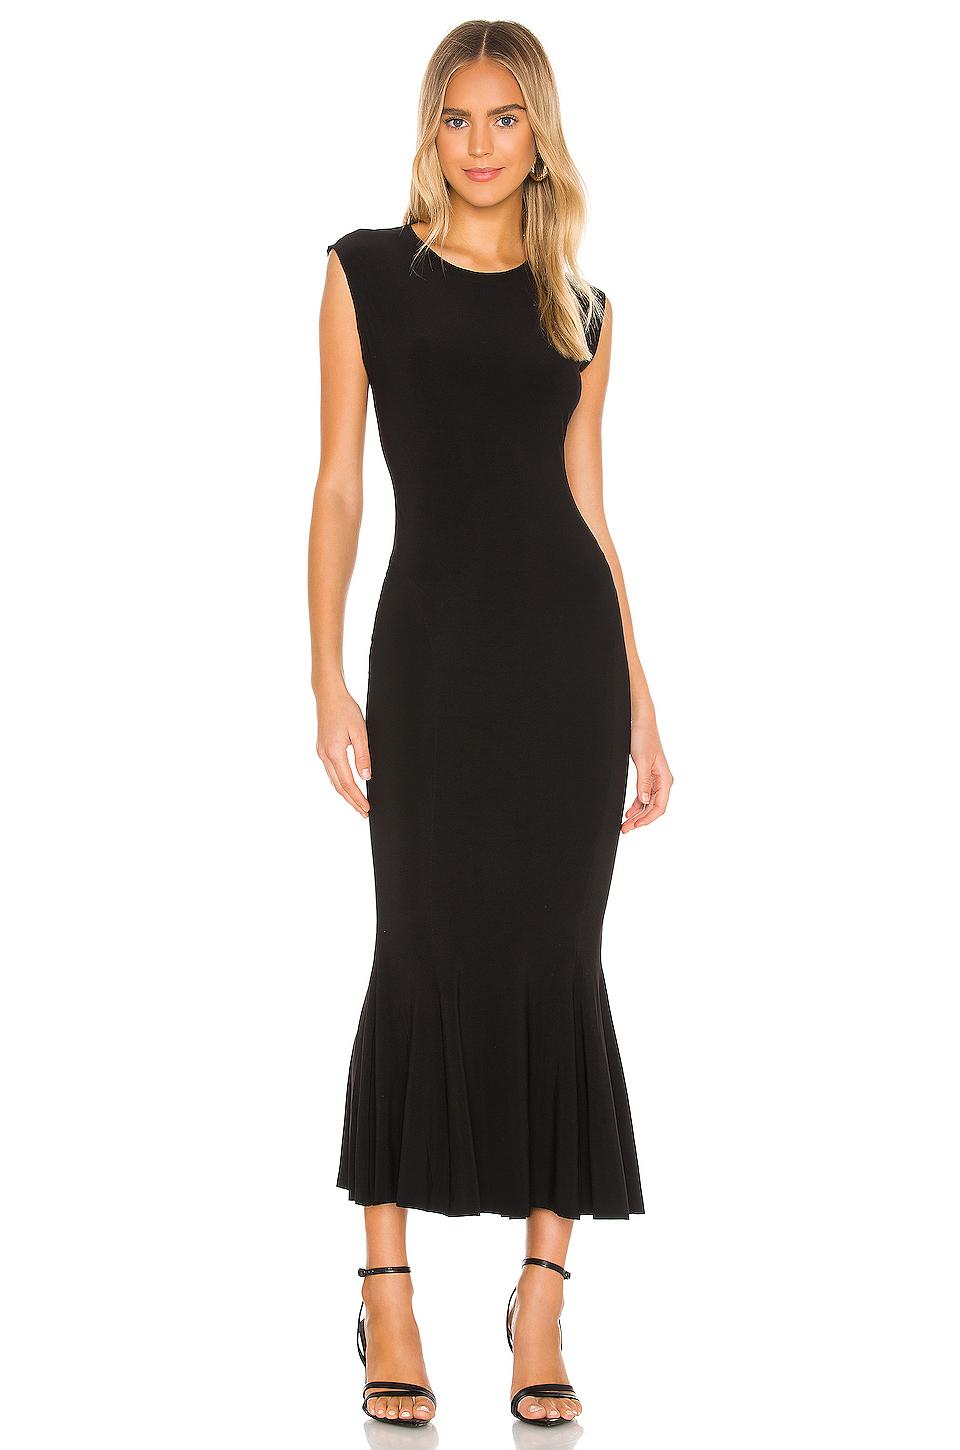 Norma Kamali Synthetic Sleeveless Fishtail Dress in Black - Lyst